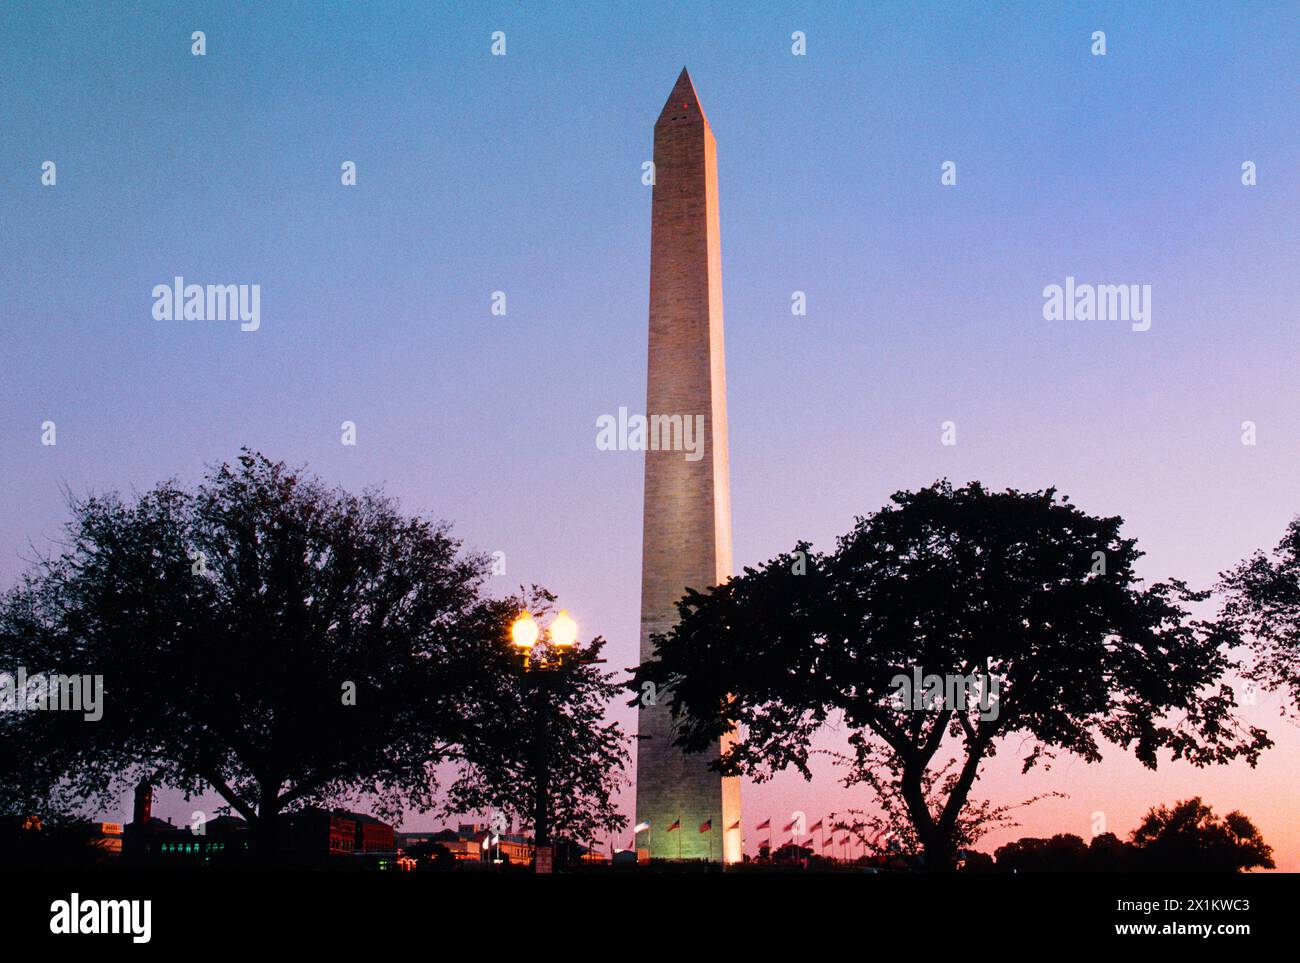 George Washington Memorial Monument Washington DC, USA. National Mall landmark. Sunset or night. Stock Photo